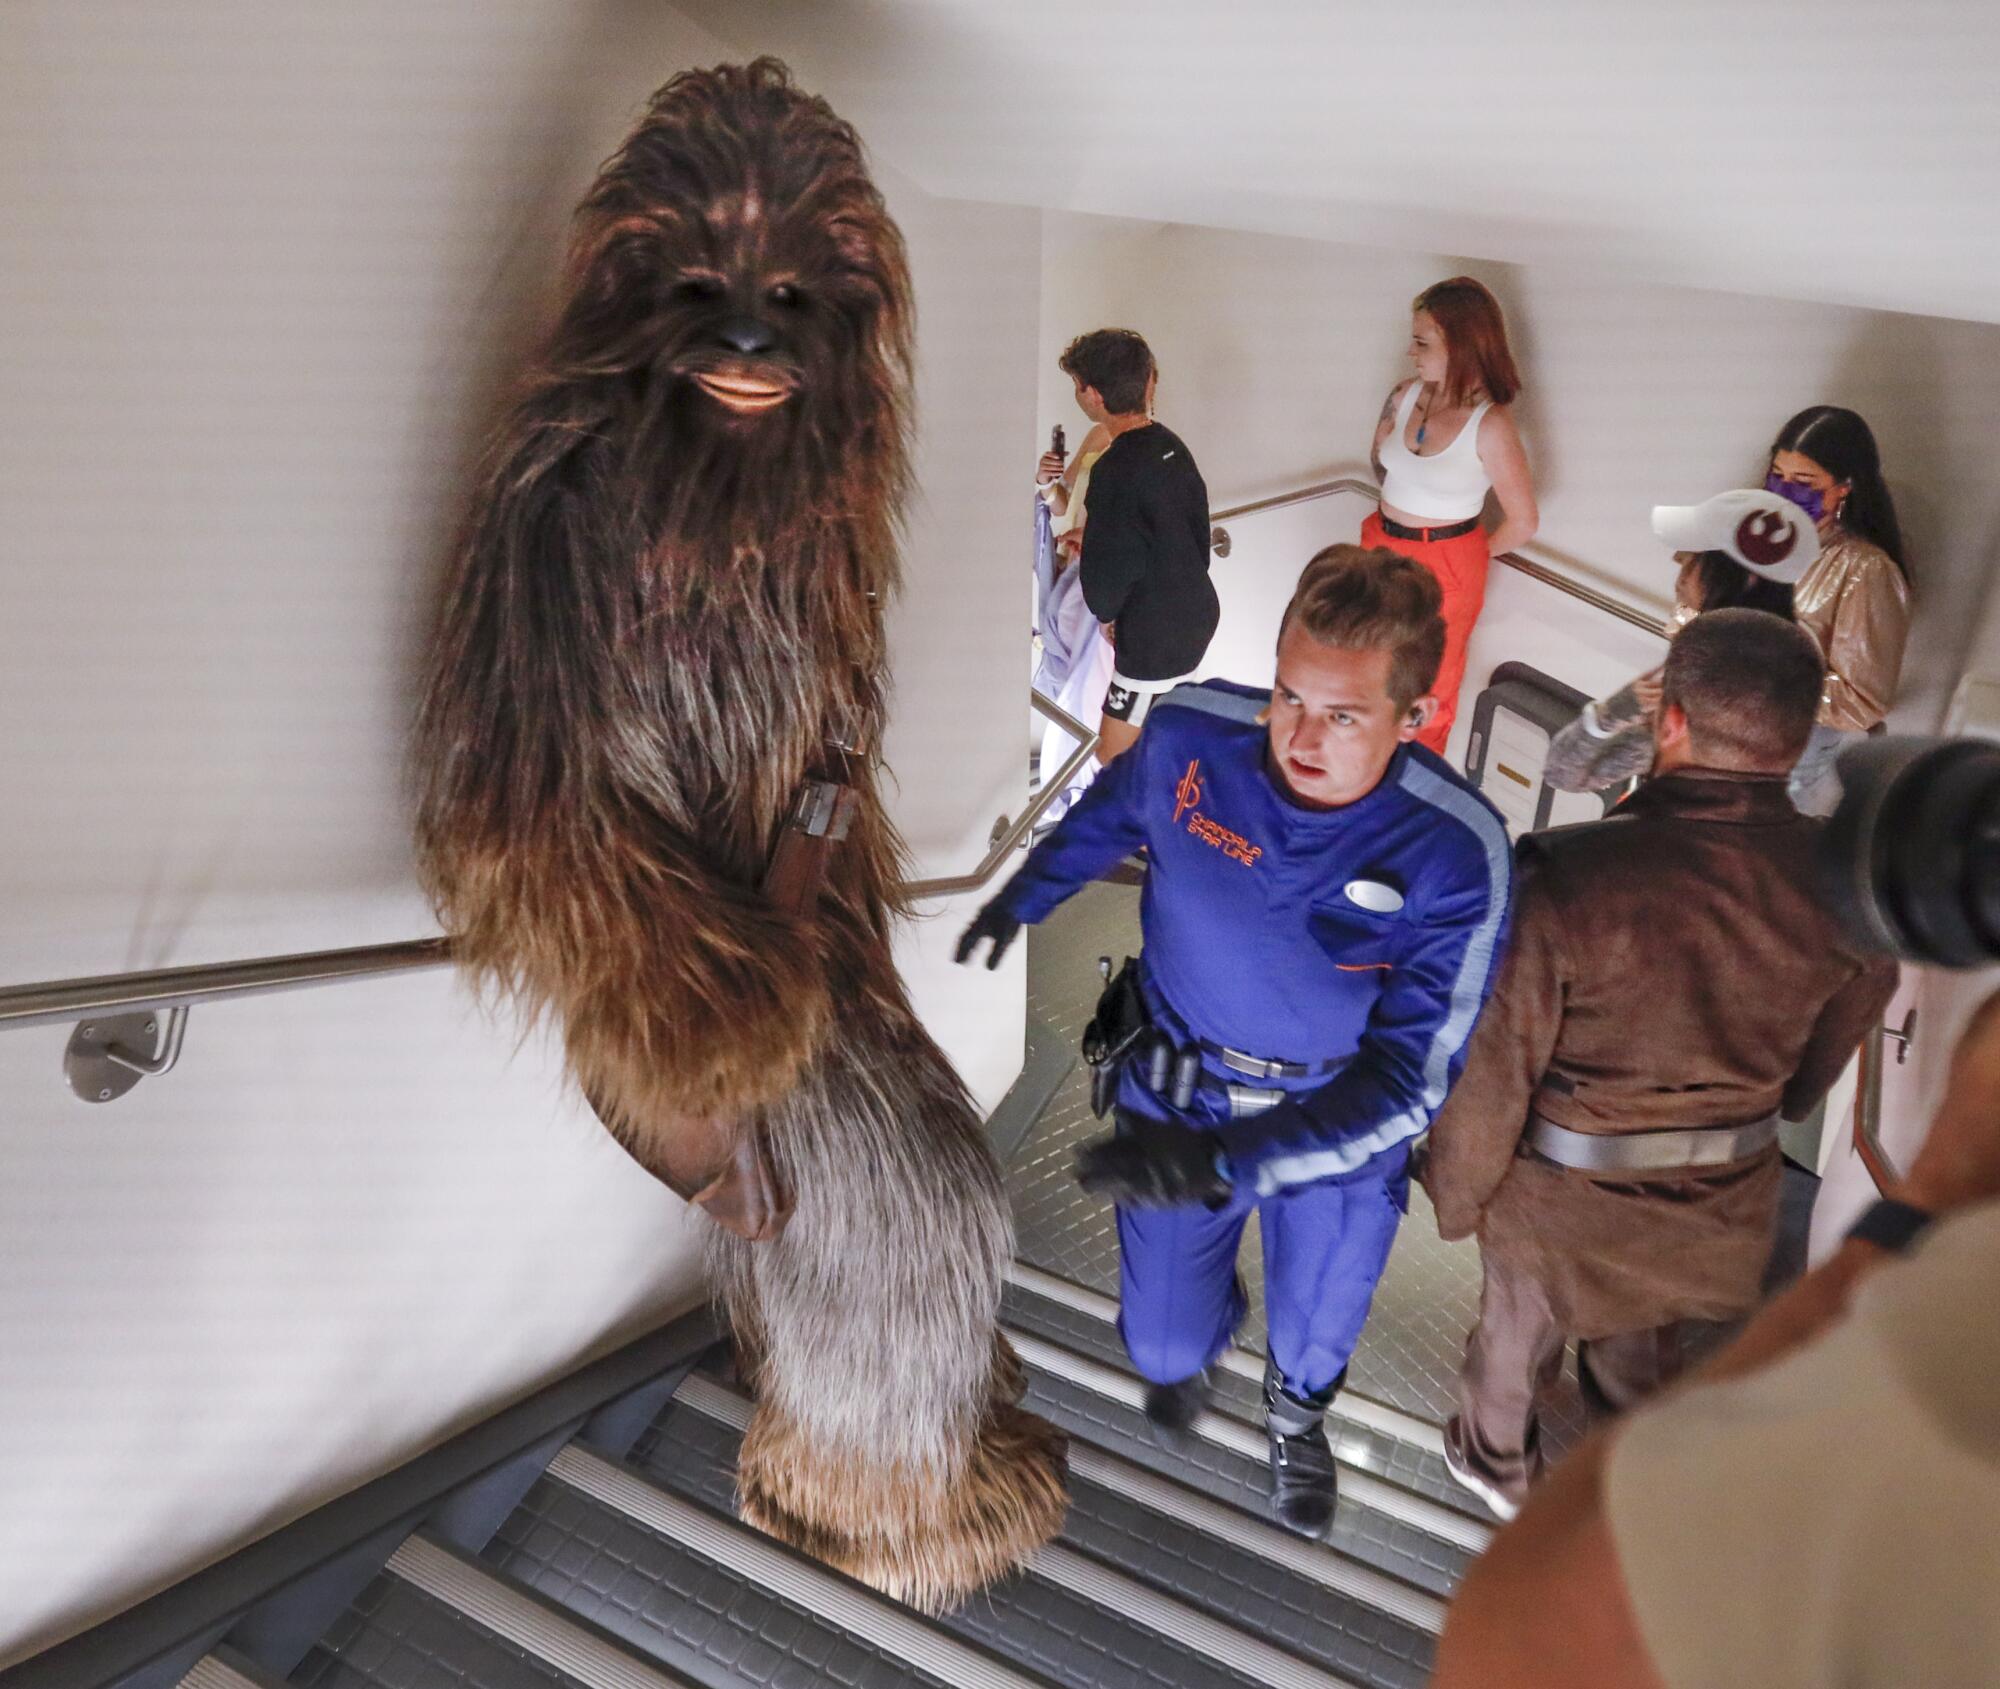 Sammie, the ship's mechanic, center, leads Chewbacca, a legendary Wookiee warrior.